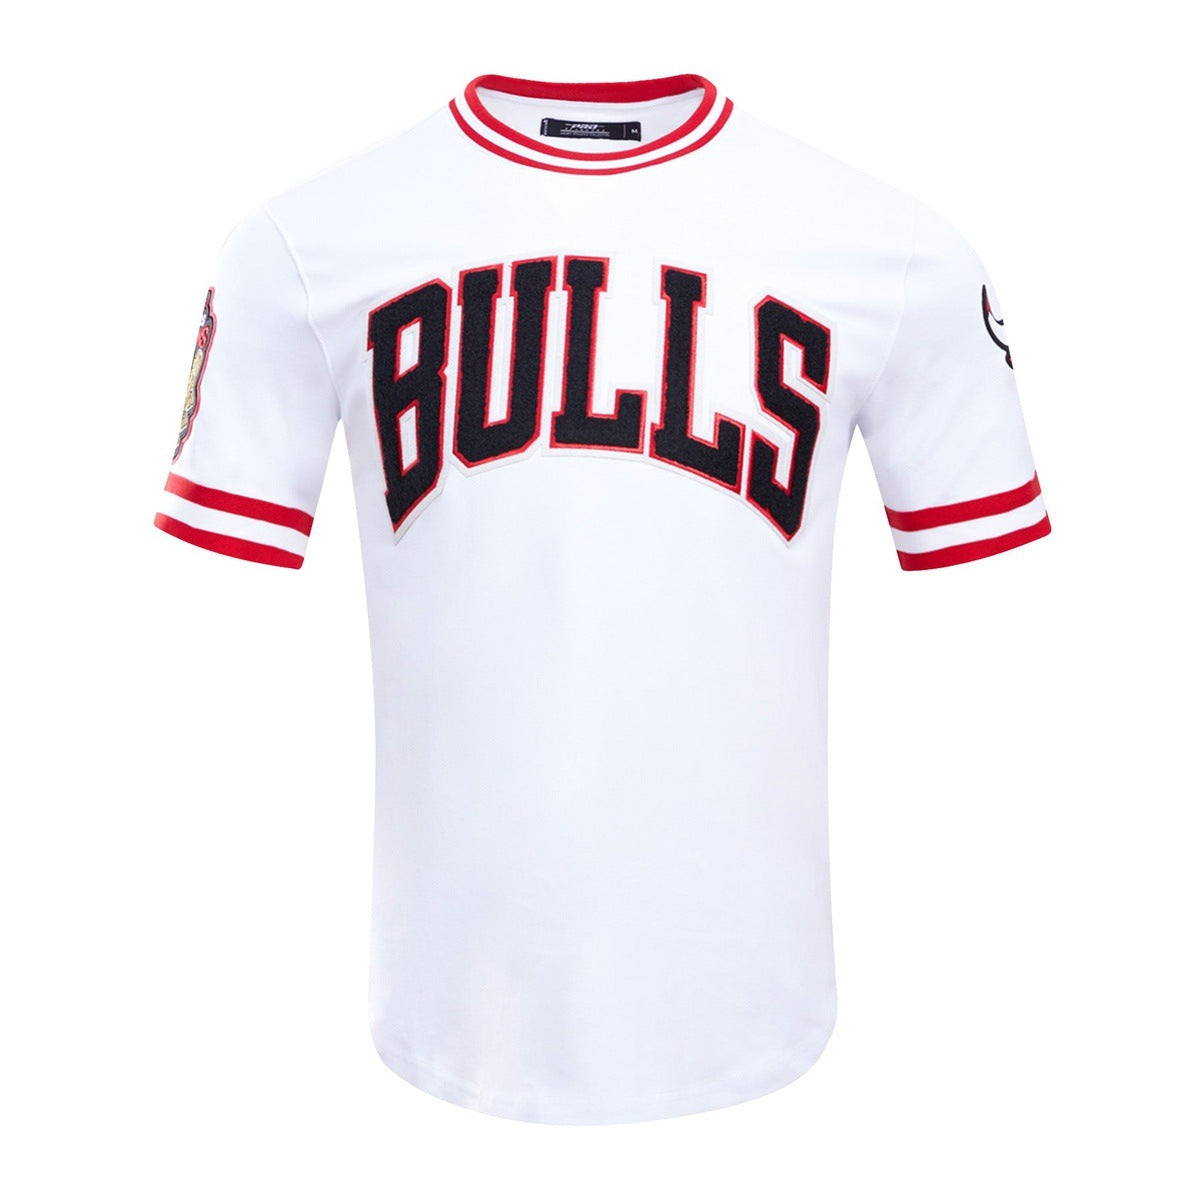 Shop Pro Standard Chicago Bulls Big Logo Satin Jacket BCBU55015-RED red